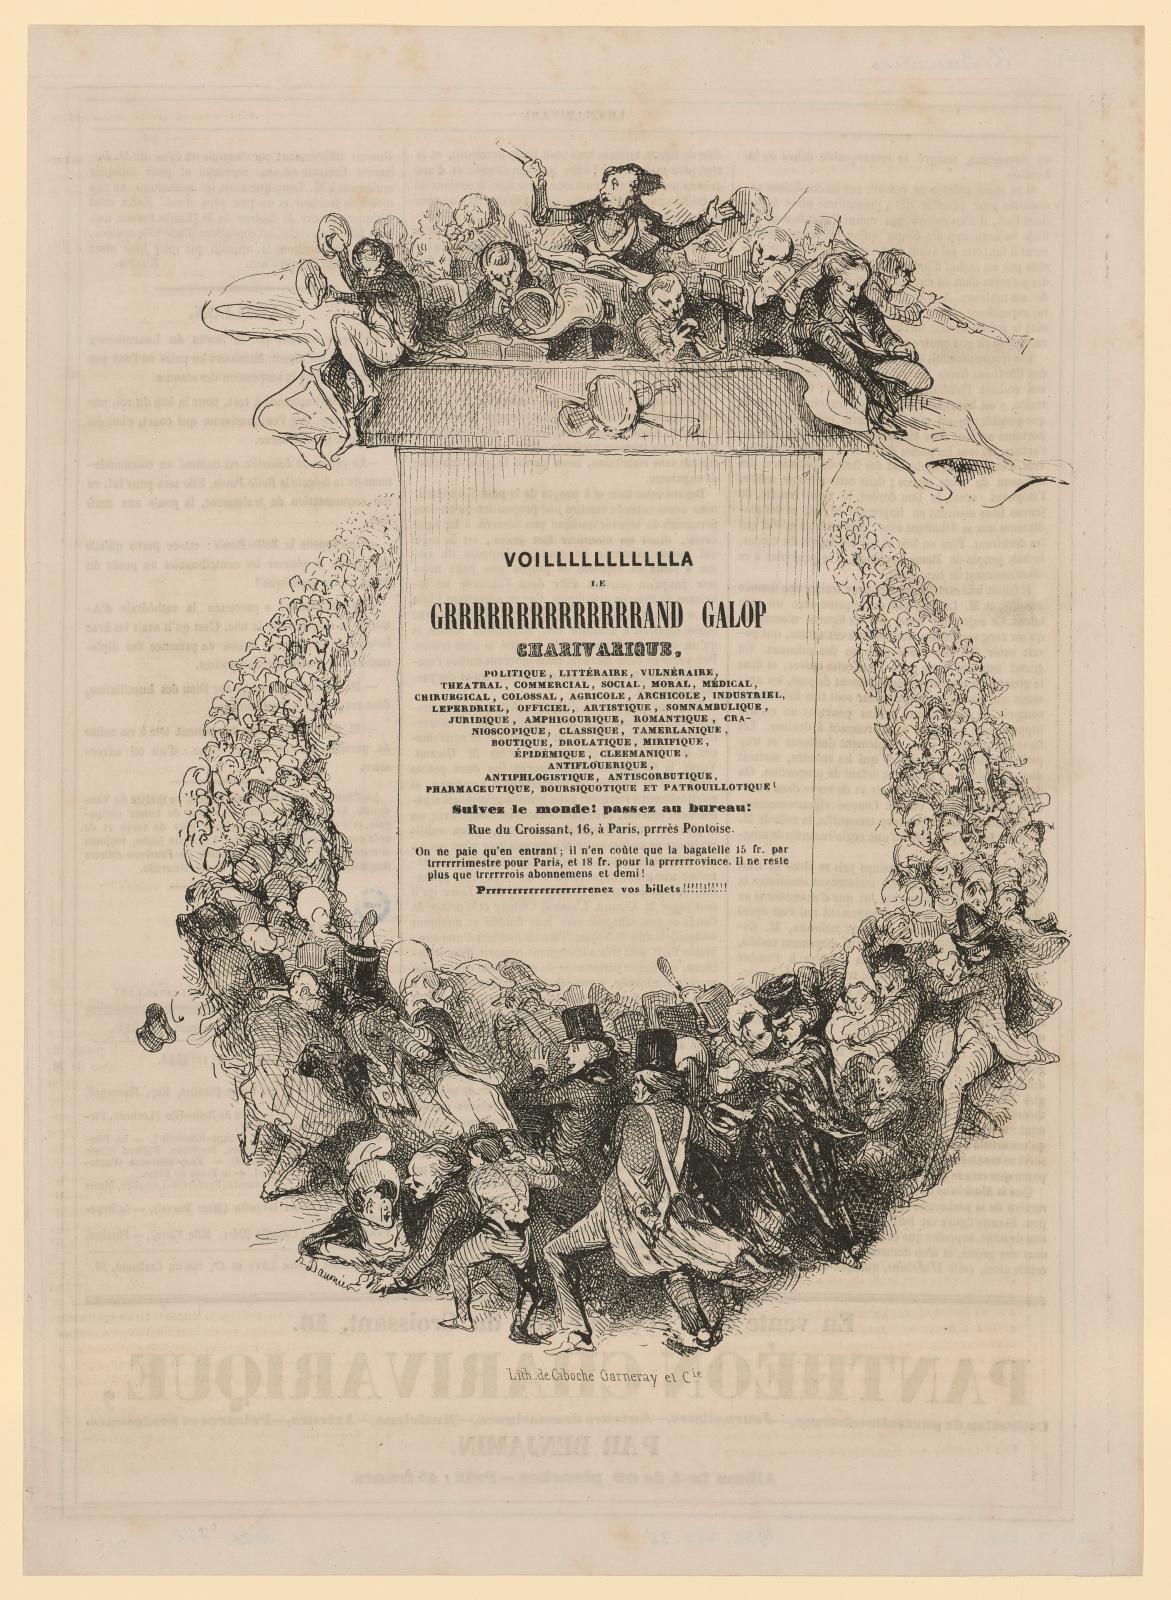 Honoré Daumier, Voilllllllllllà le grrrrrrrrrrrrrrand galop charivarique, erschienen in: Le Charivari, 1. Mai 1839